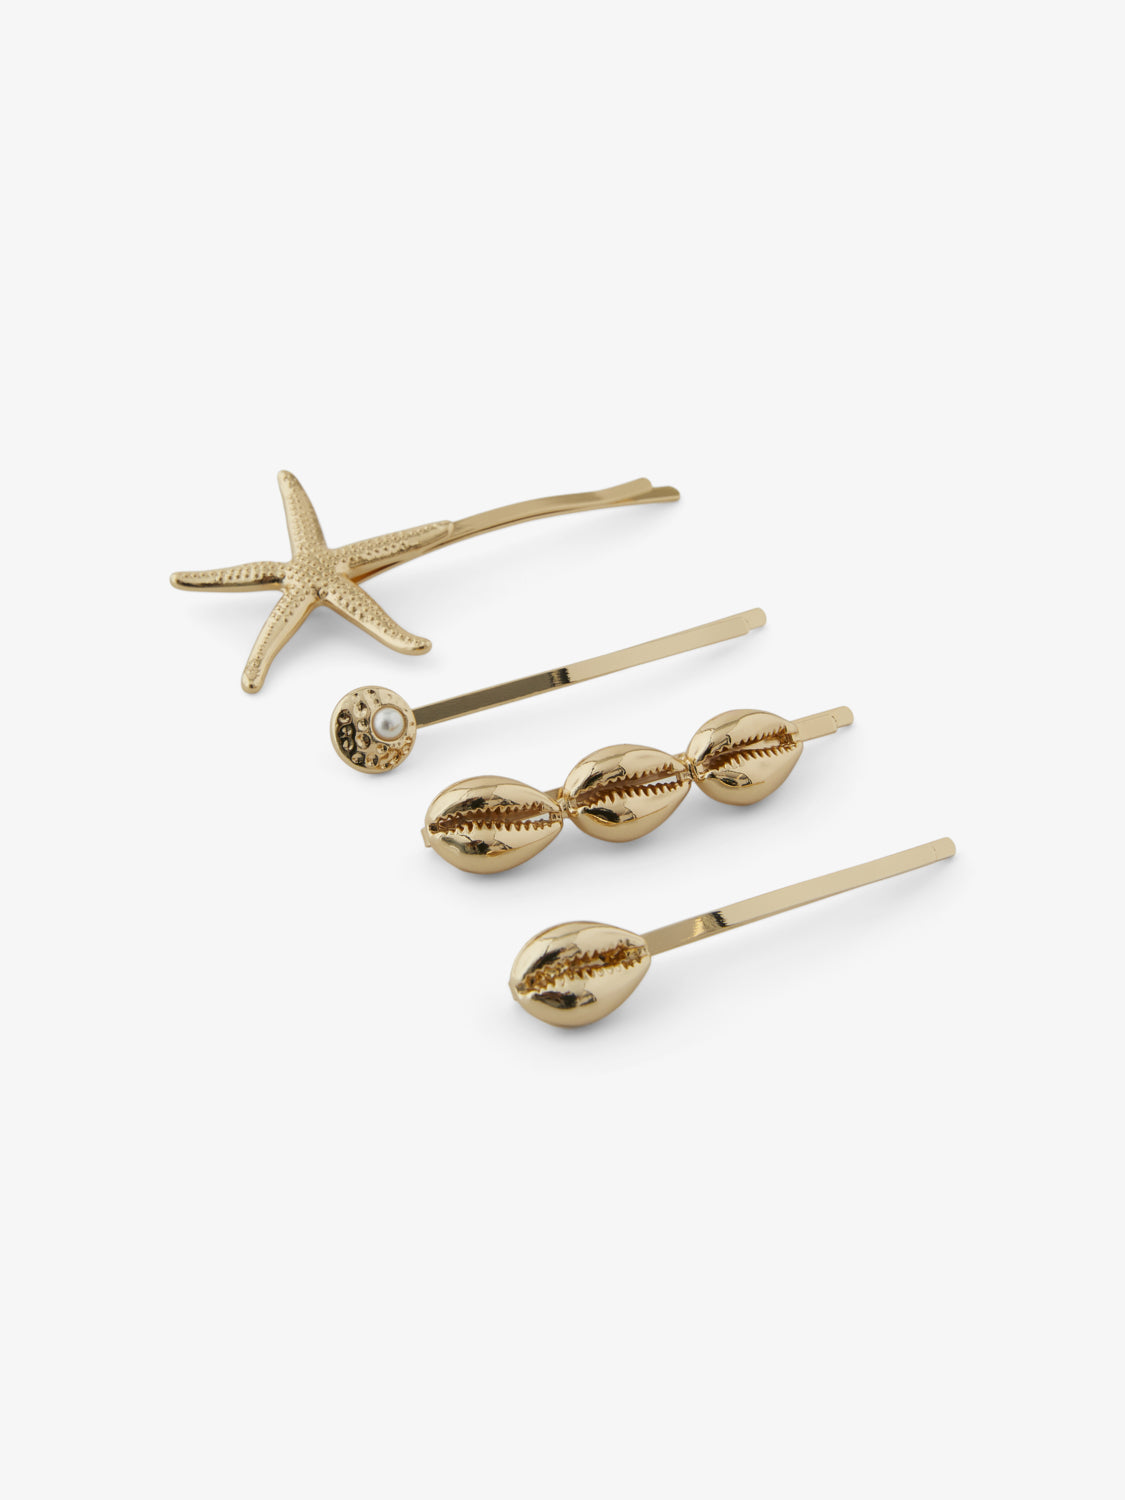 Gold Seashell Hairpins